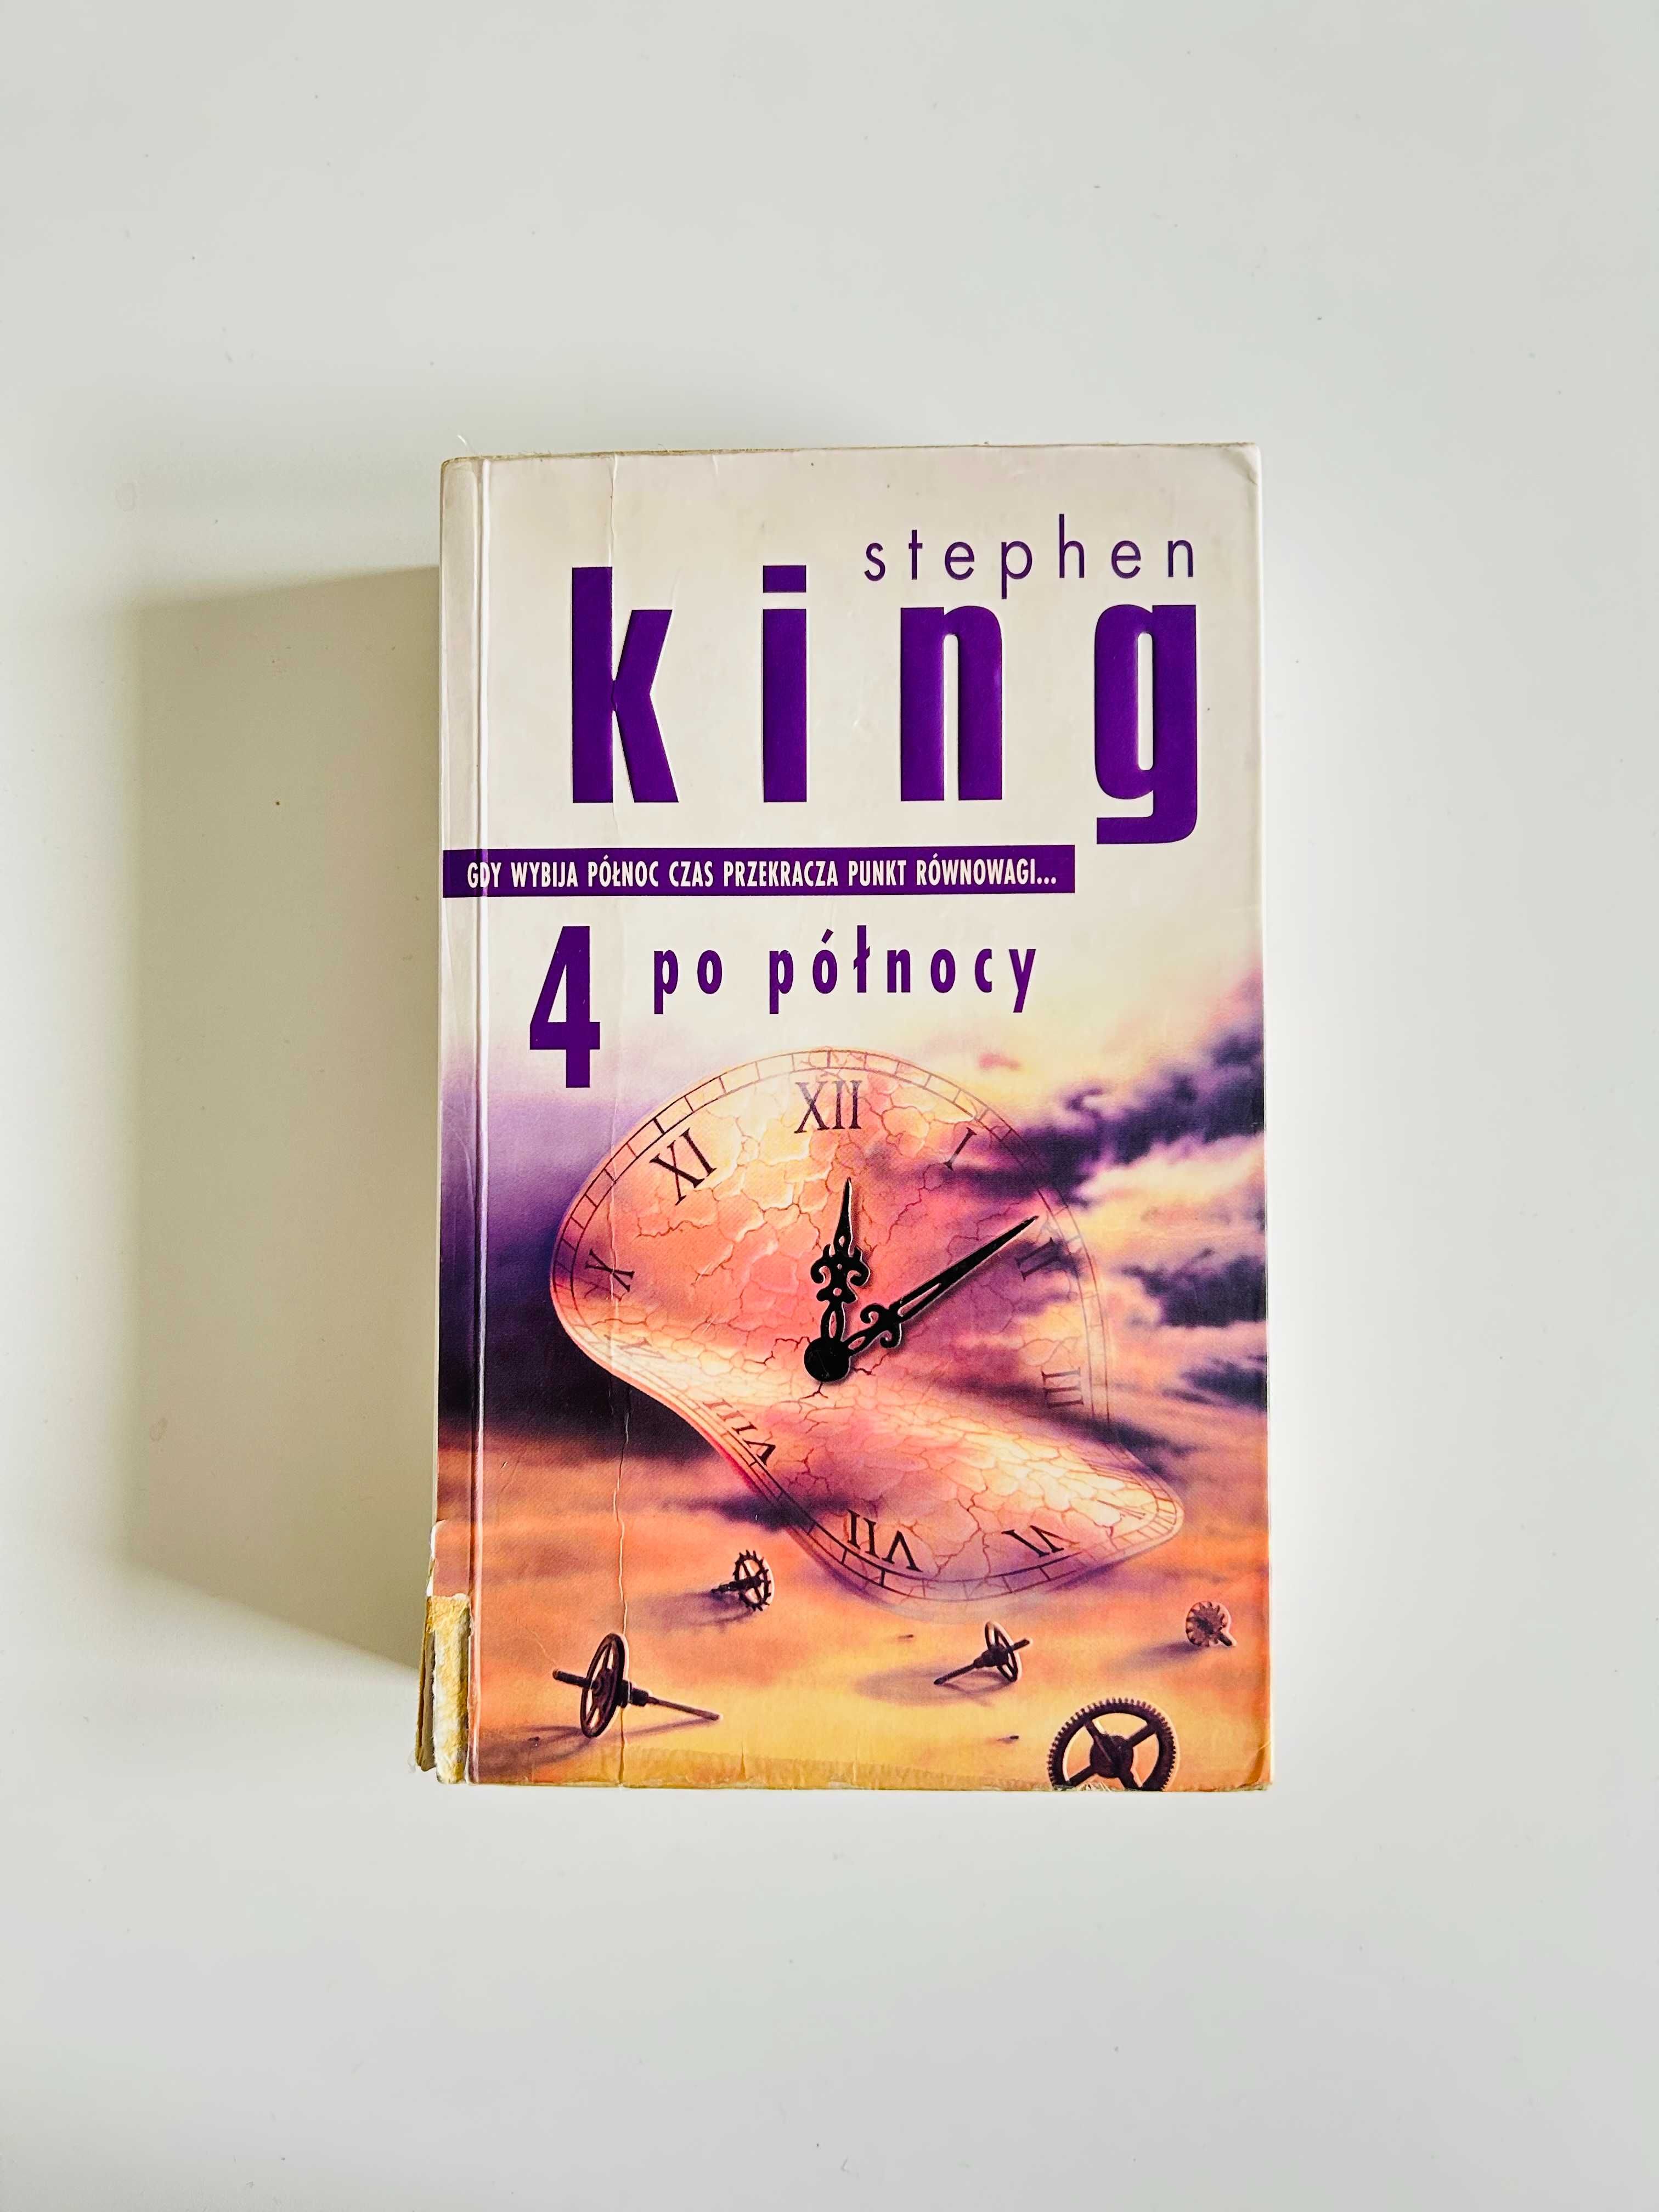 Stephen King "4 po północy" / Książka Stephen King "4 po północy"